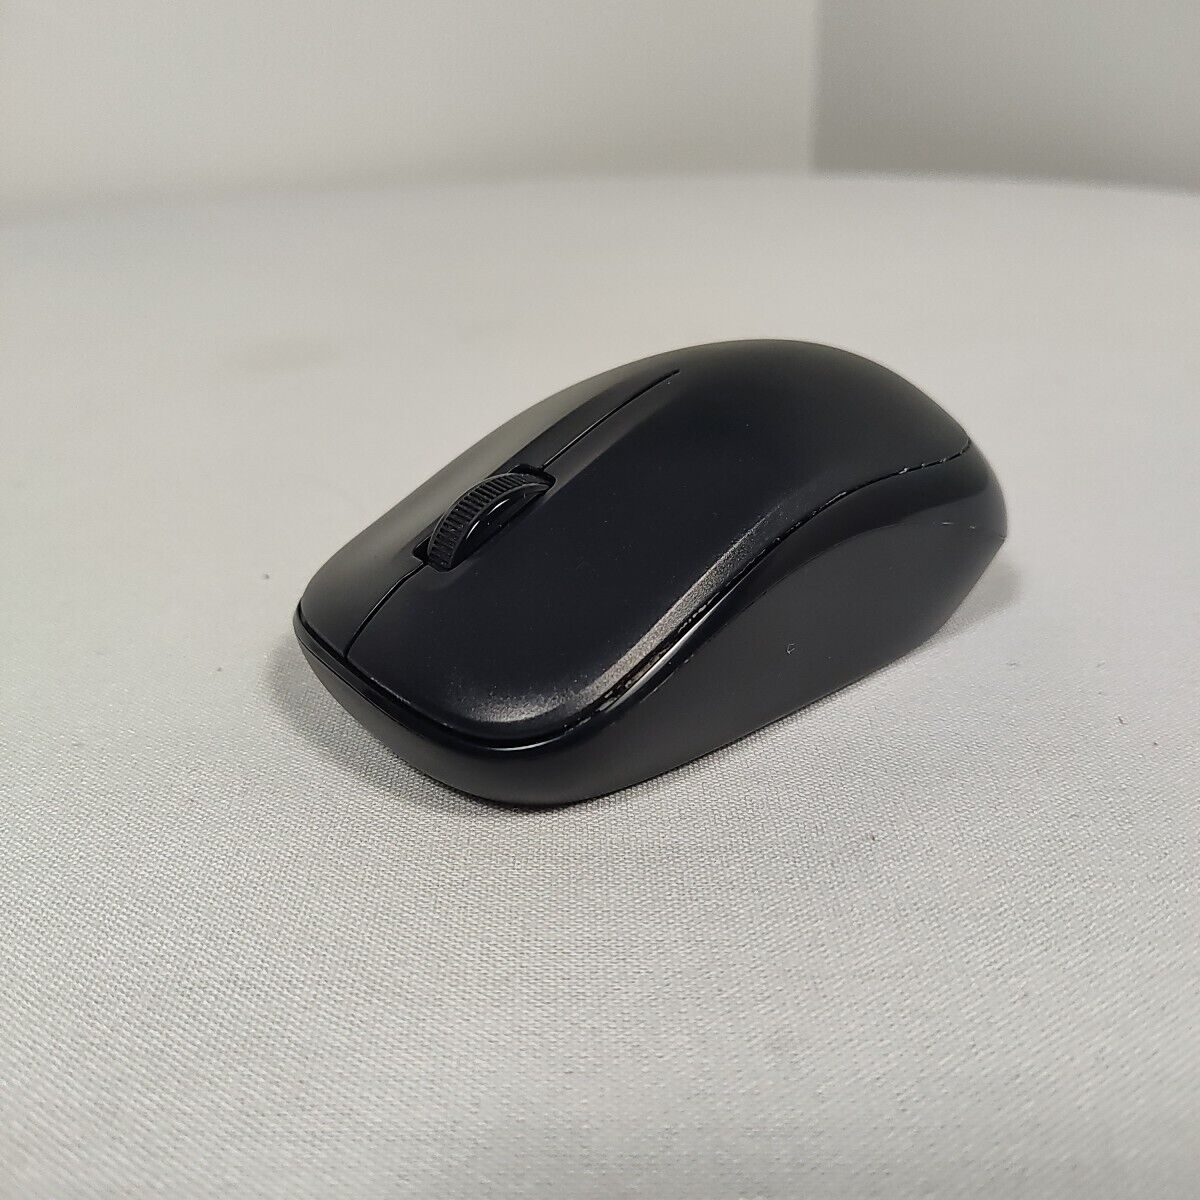 Seenda Wireless Mouse Black 2- Button Noiseless Click 2.4G Plug & Play